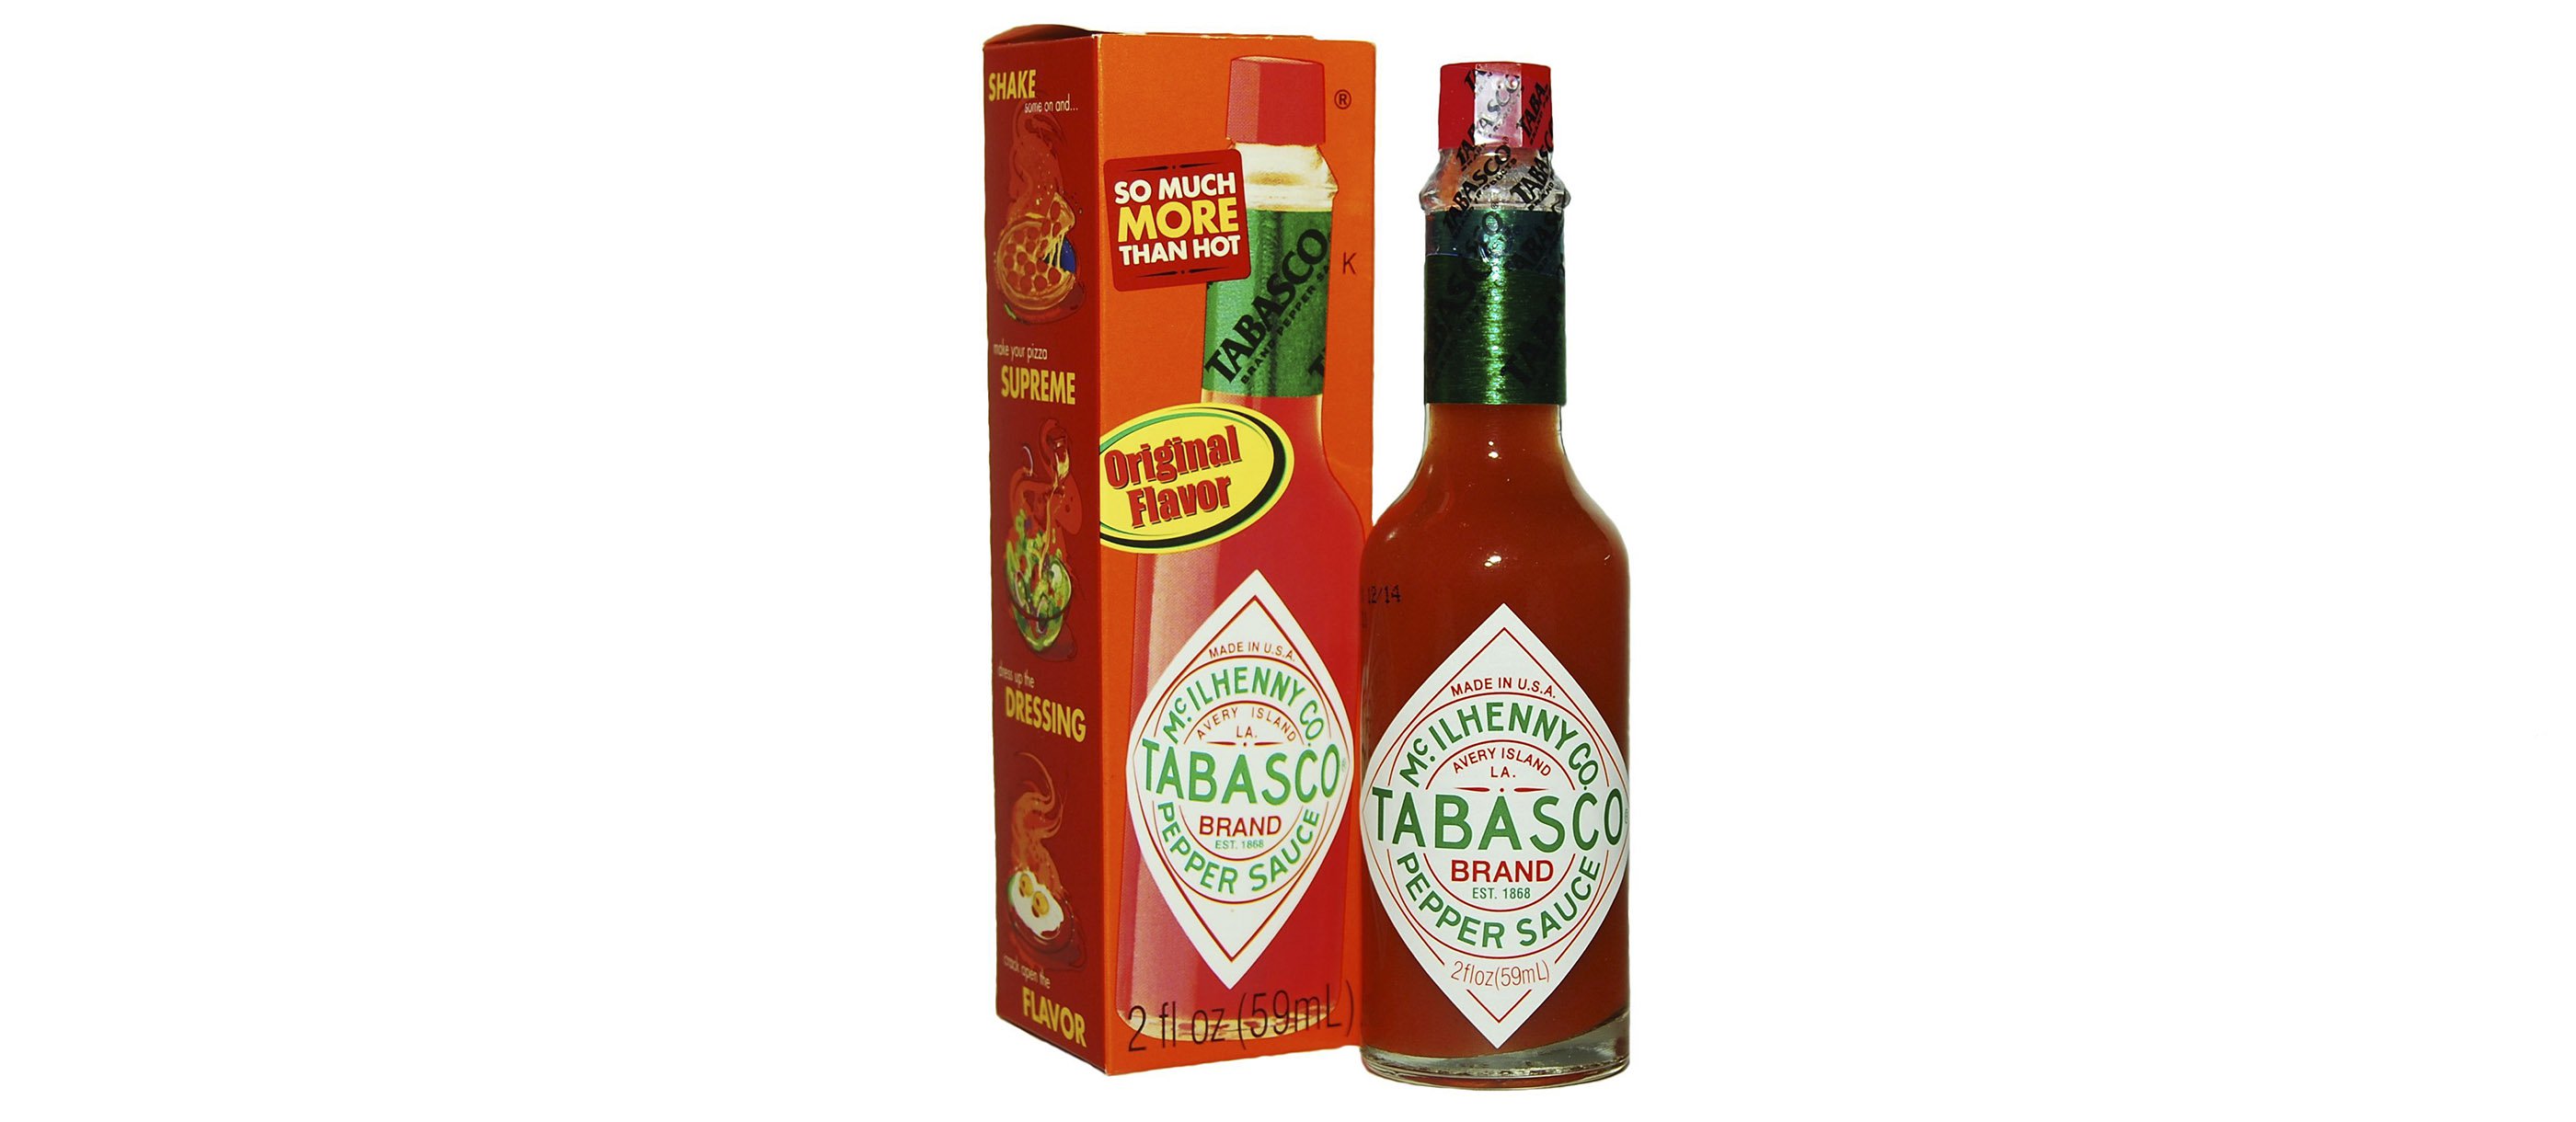 Tabasco Sauce  Local Hot Sauce From Louisiana, United States of America